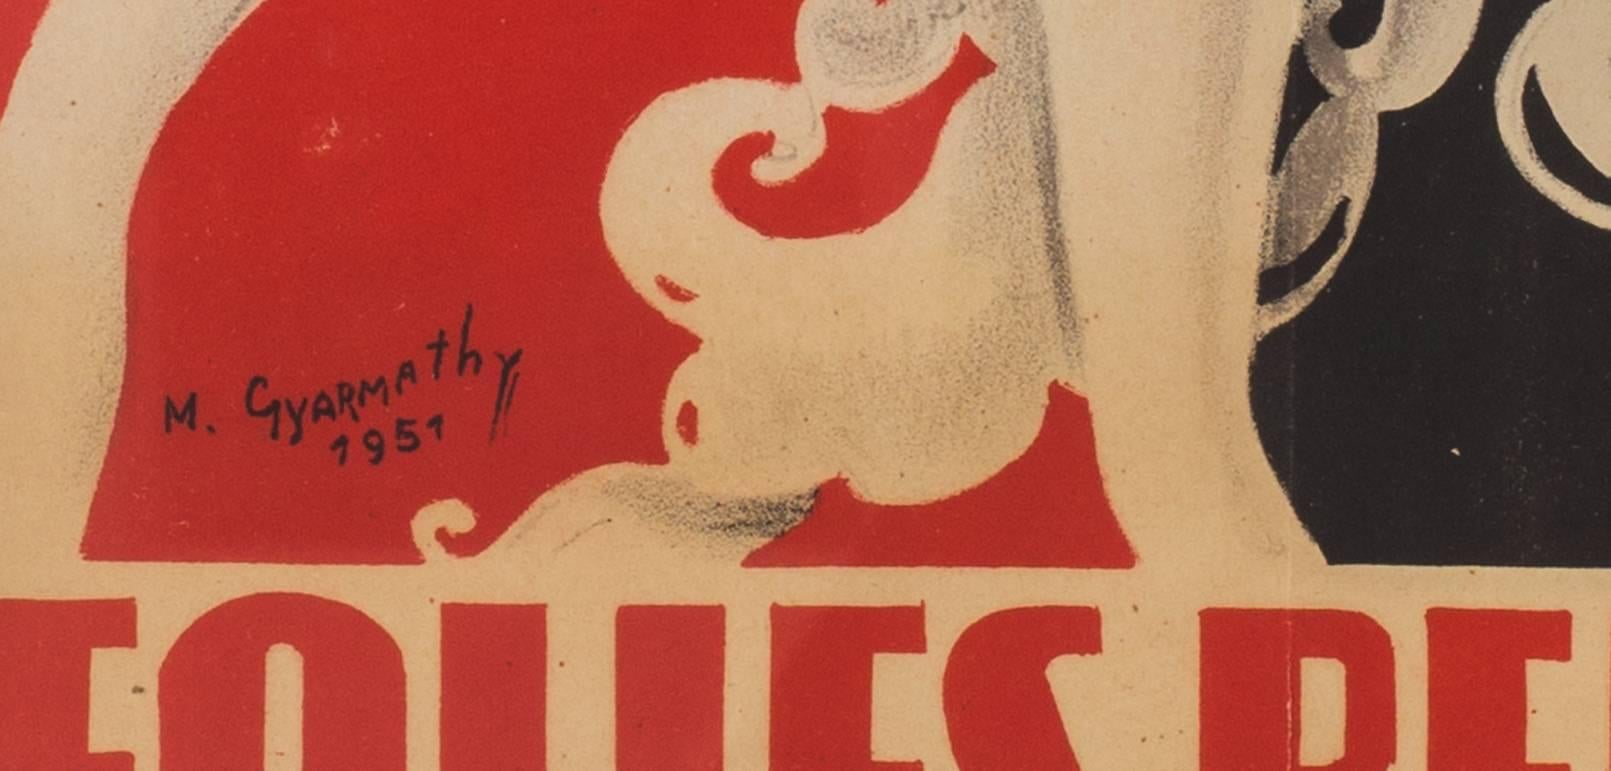 La Revue des Folies Bergere, signed by M. Gyarmathy (Miss Bluebell), 1951 - Art Nouveau Print by Unknown